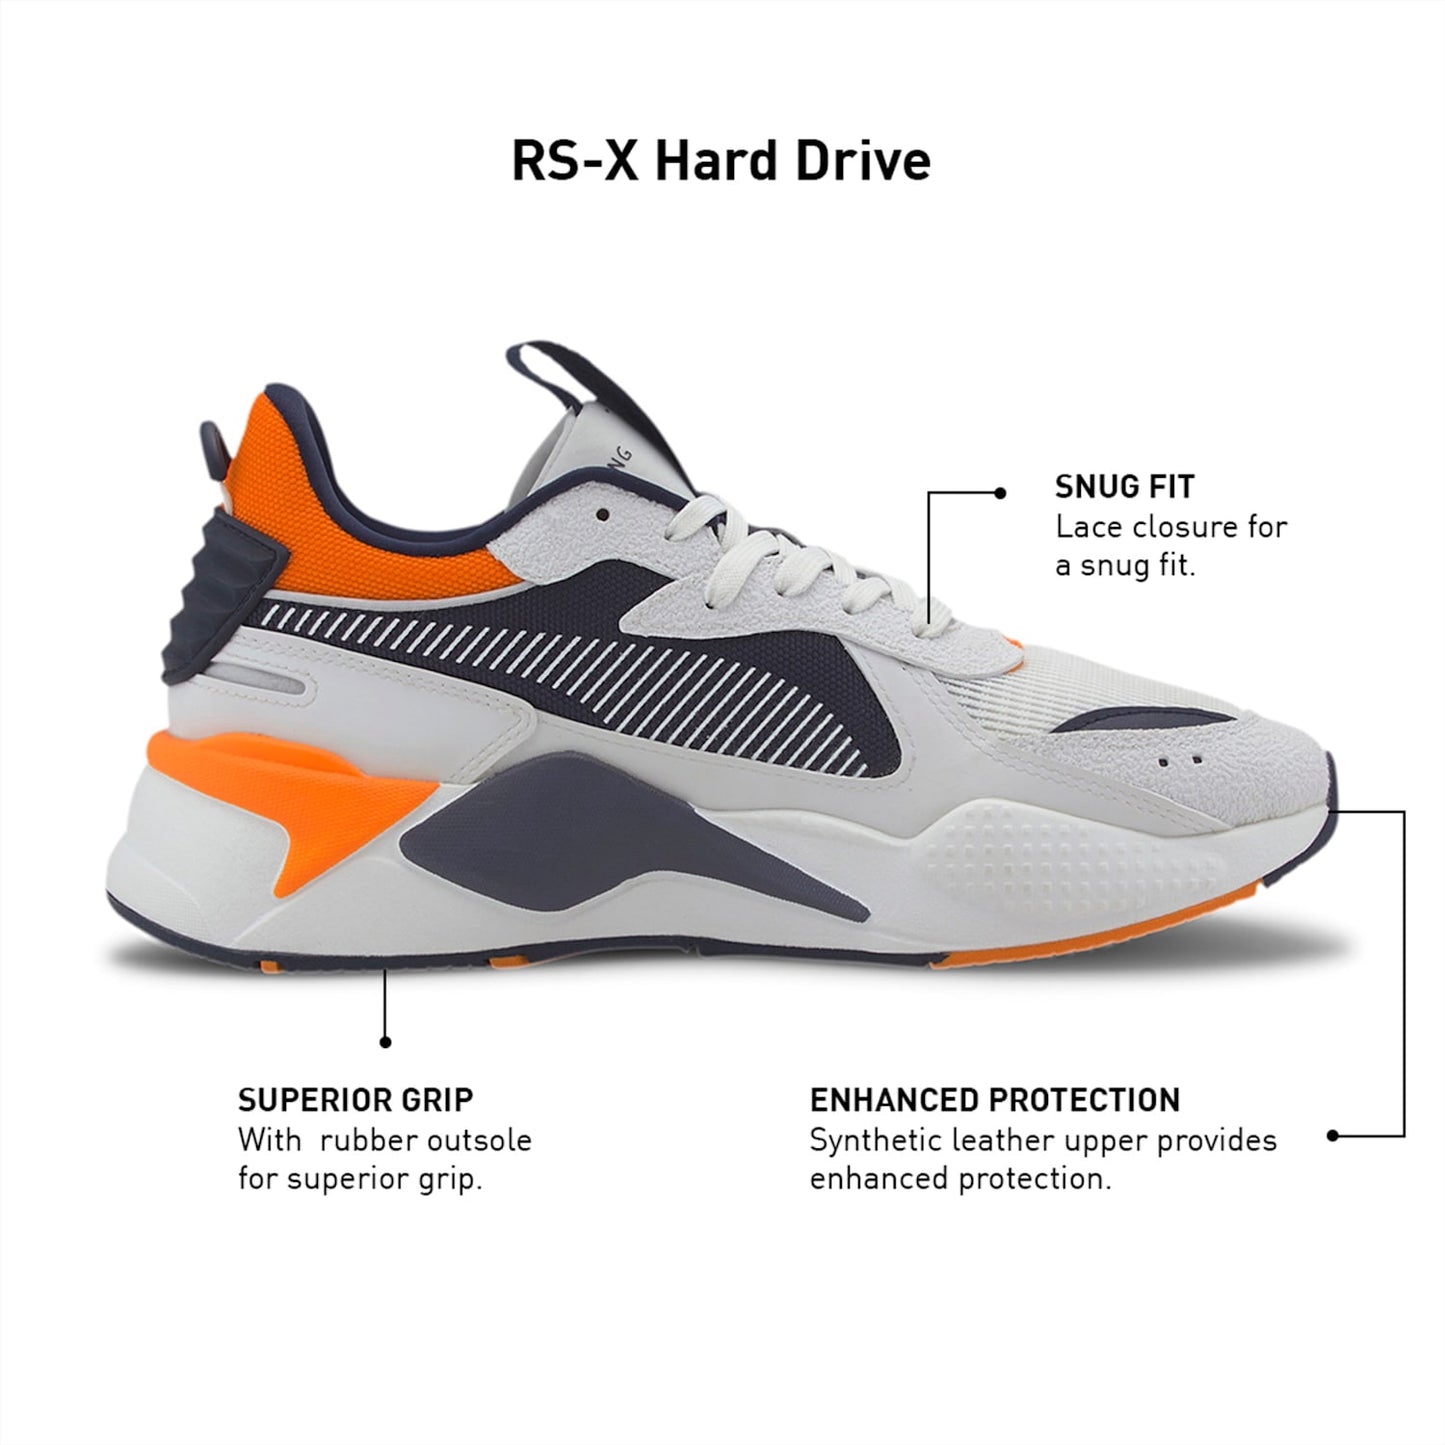 RS-X Hard Drive Trainers-369818-08